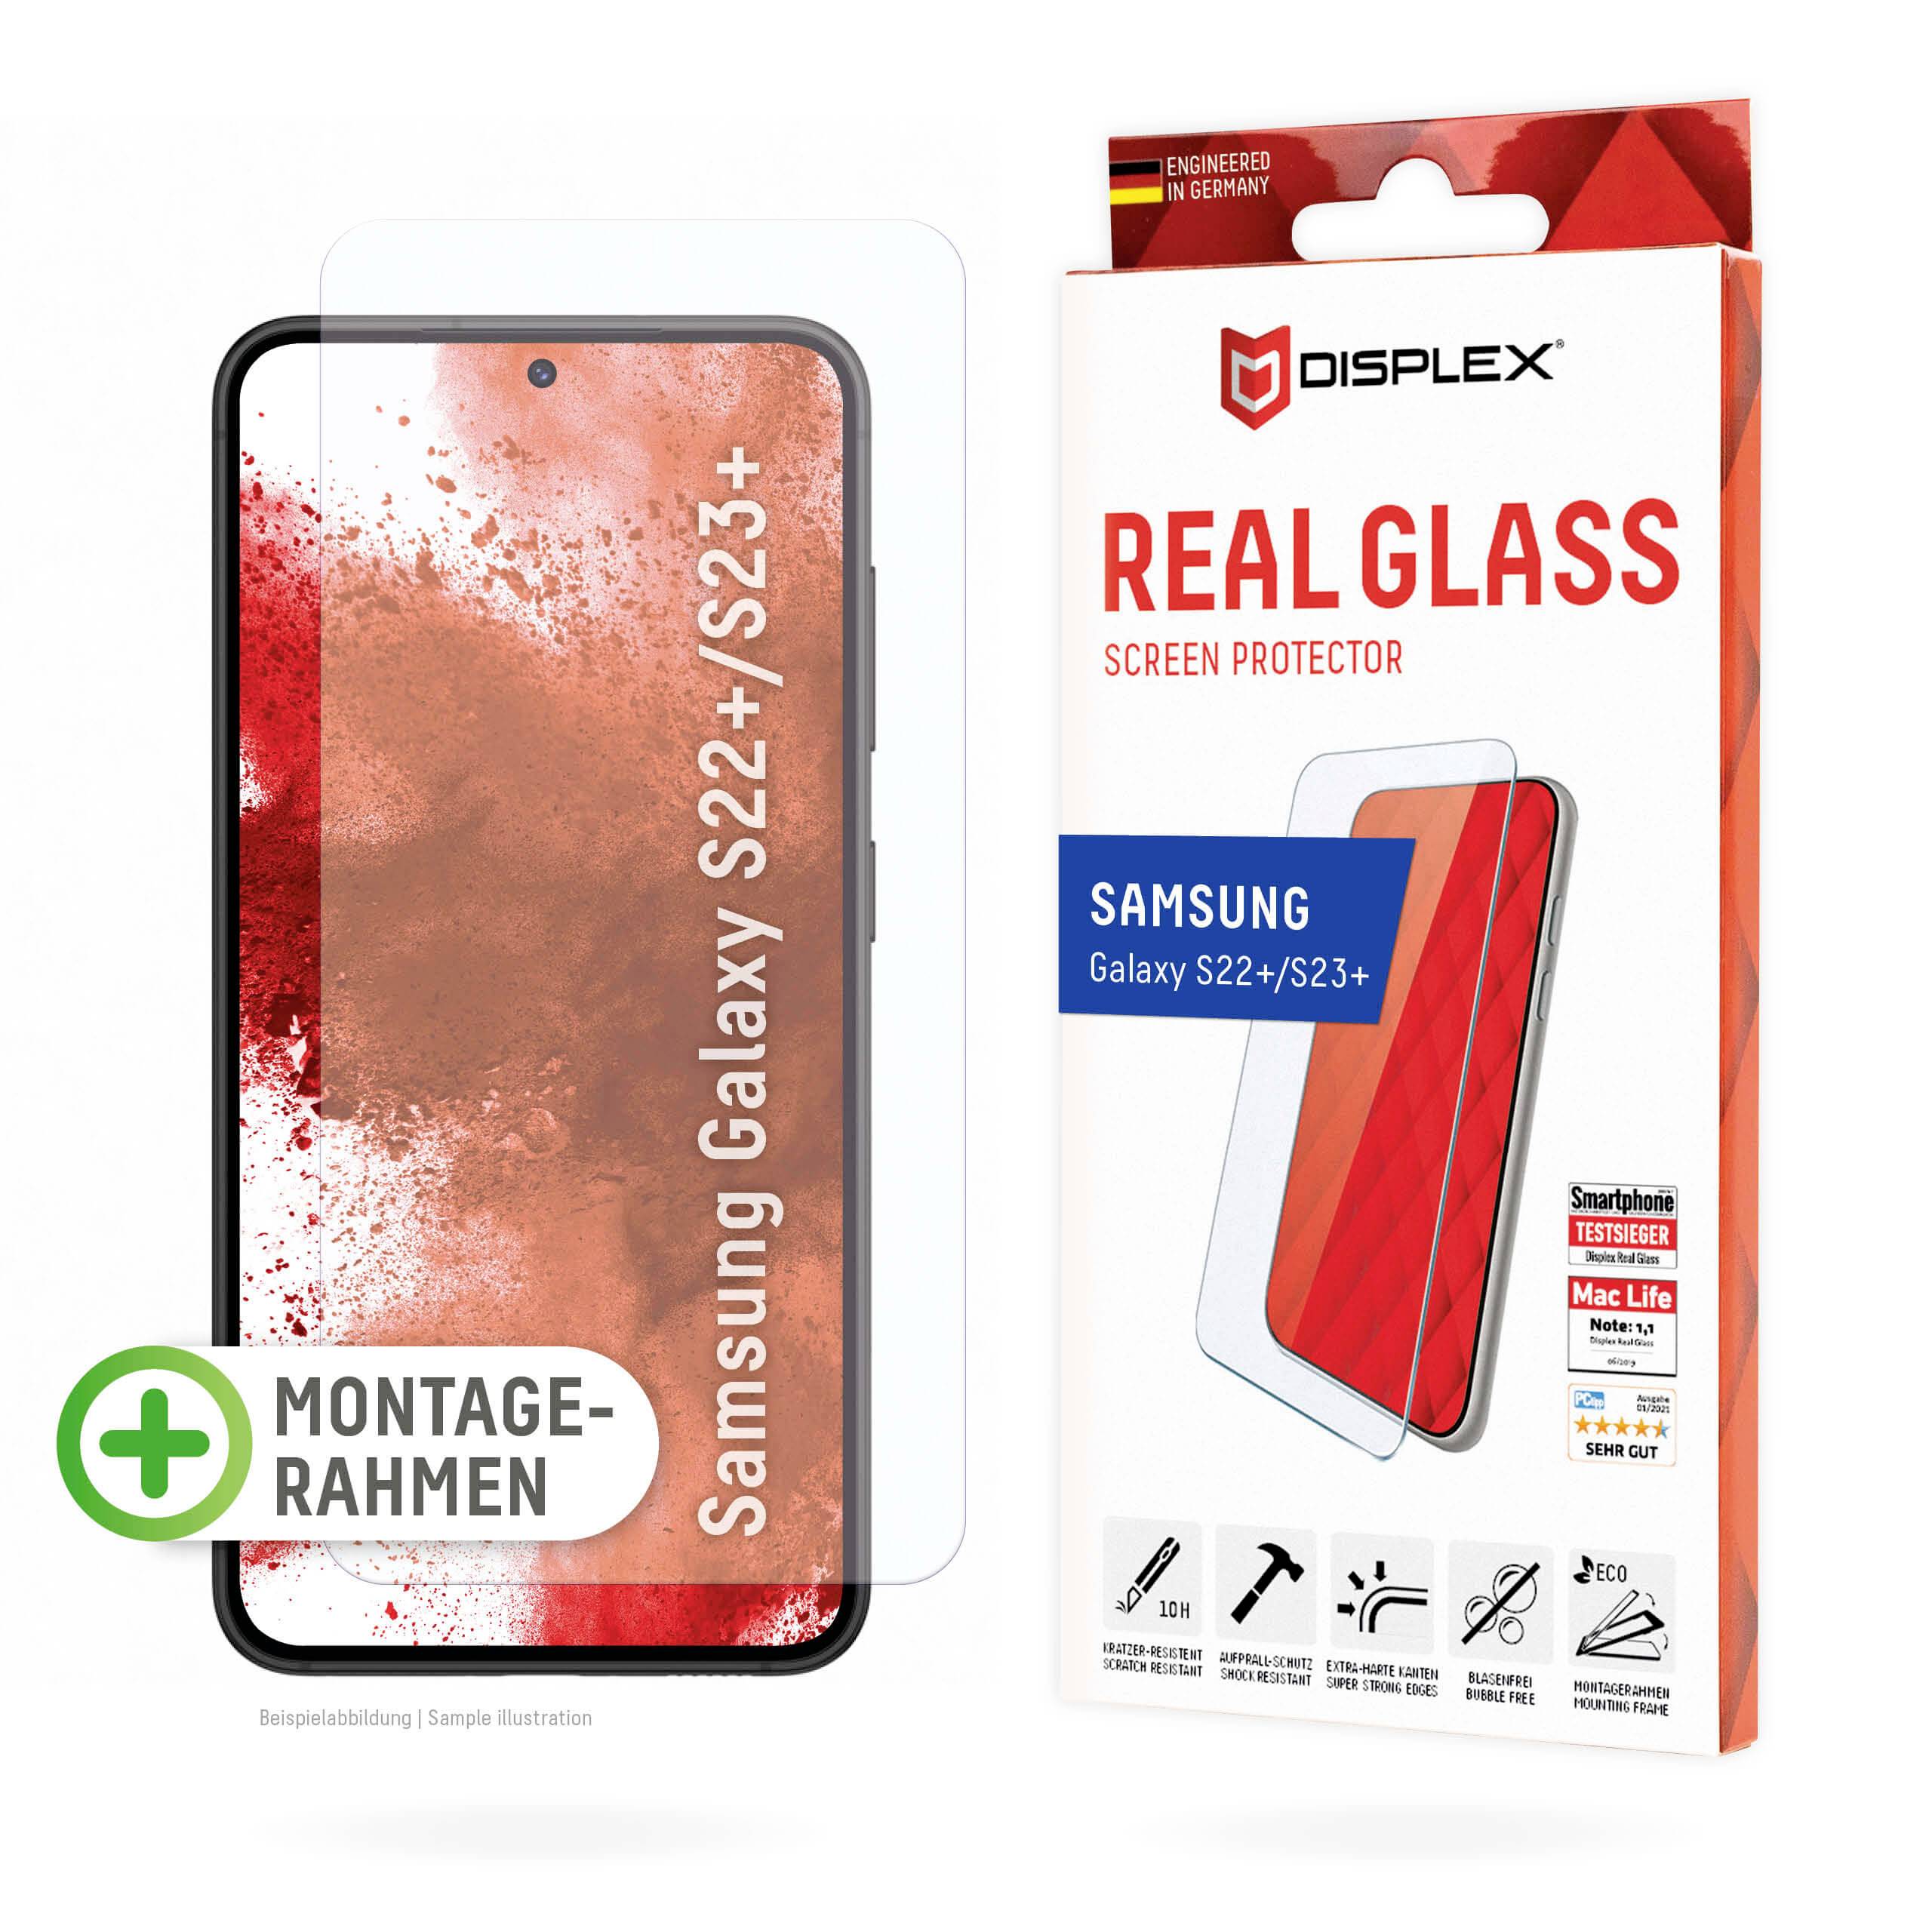 E.V.I. GMBH DISPLEX Real Glass Samsung Galaxy S22+/S23+